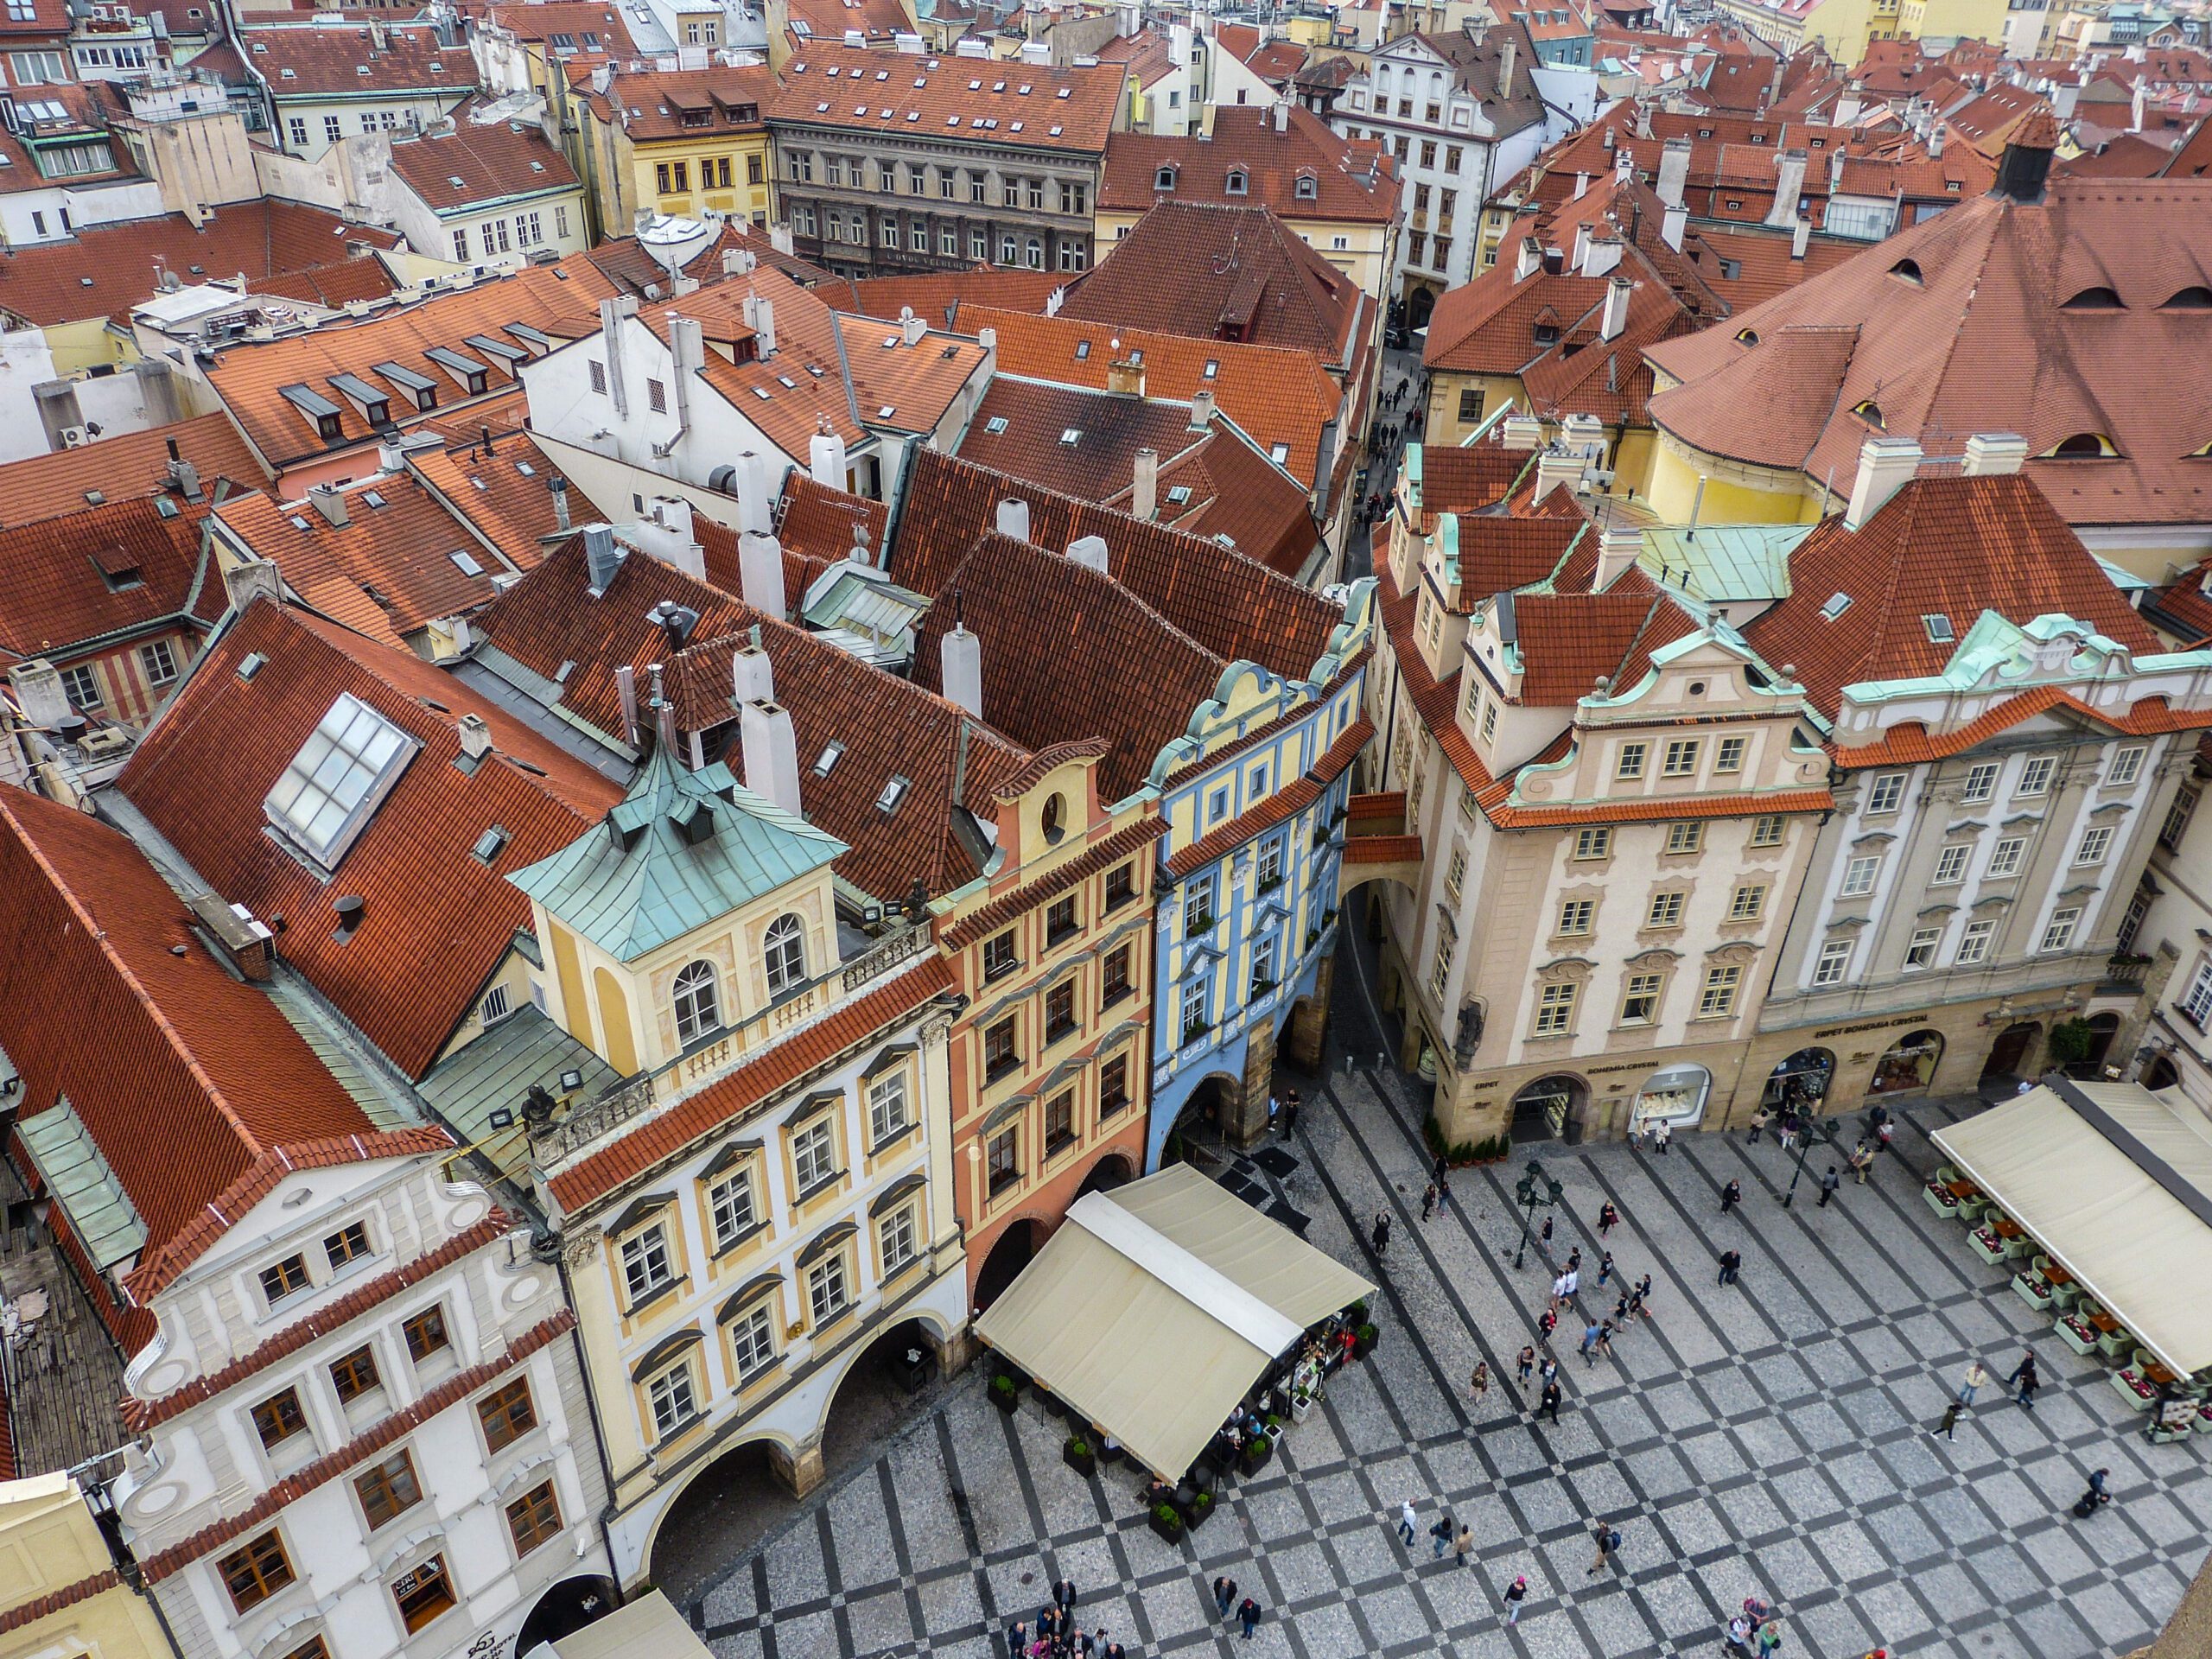 Tales Of A UAE Explorer: Walking The Cobblestone Streets Of Prague.